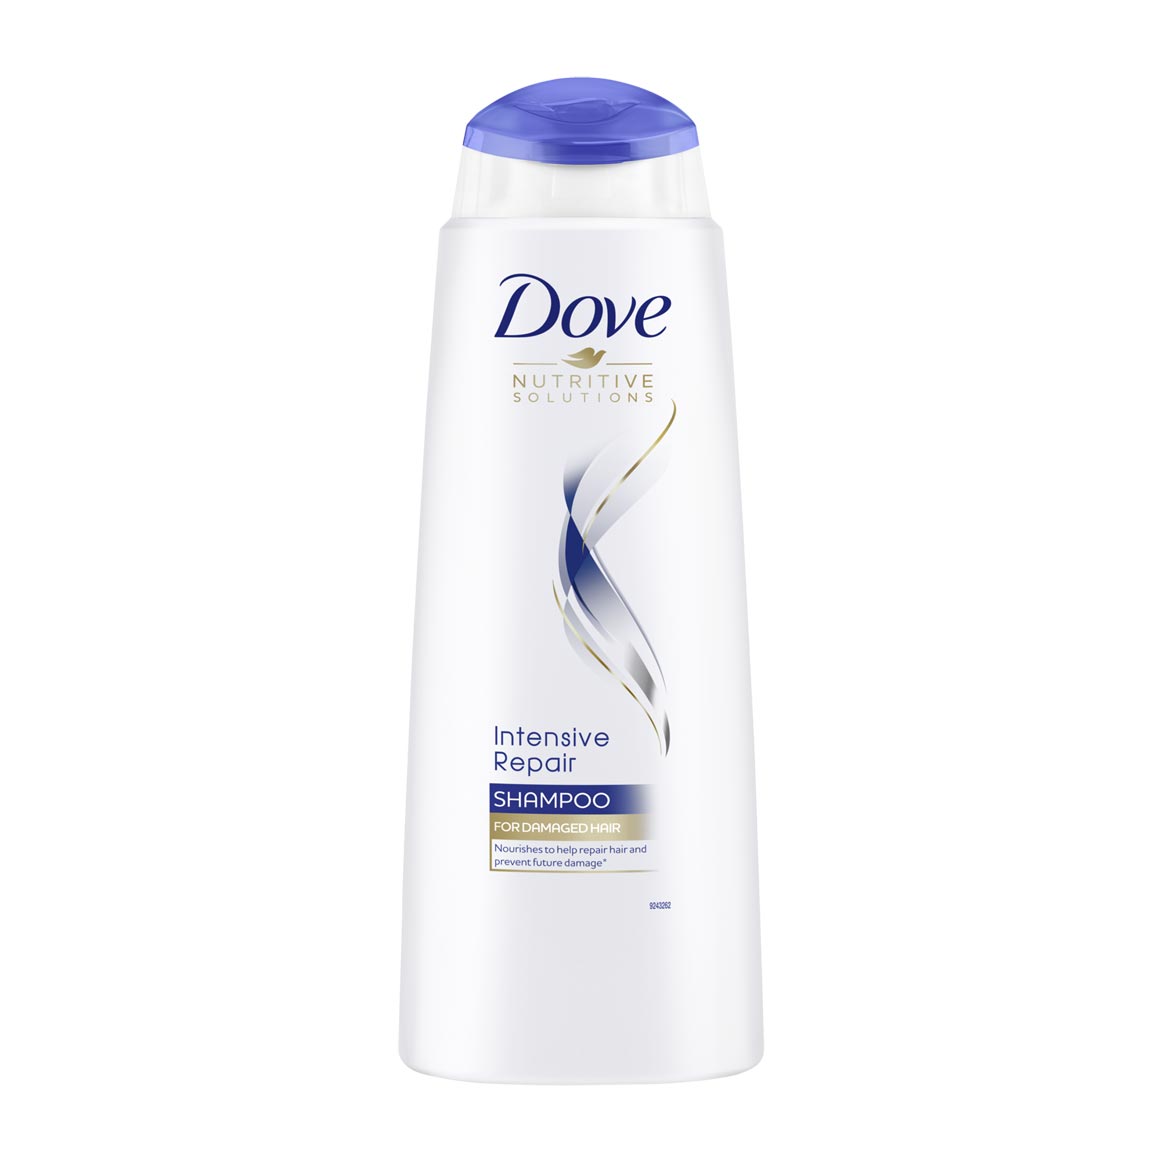 Dove Nutritive Solutions Intensive Repair Shampoo 400ml